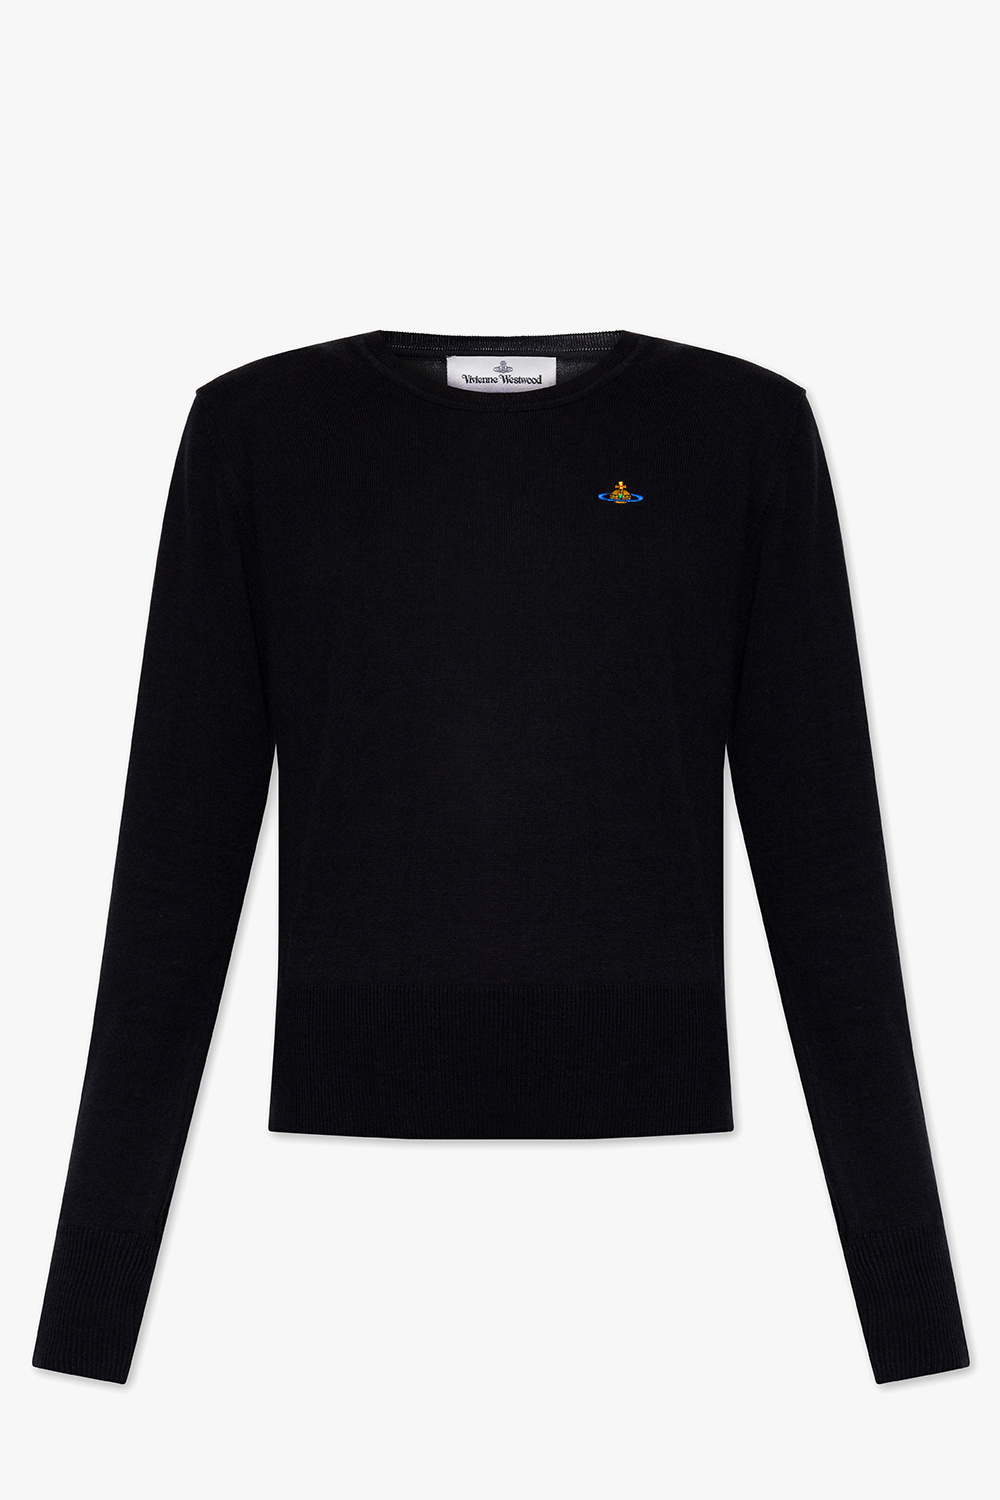 Vivienne Westwood Printed sweater with logo